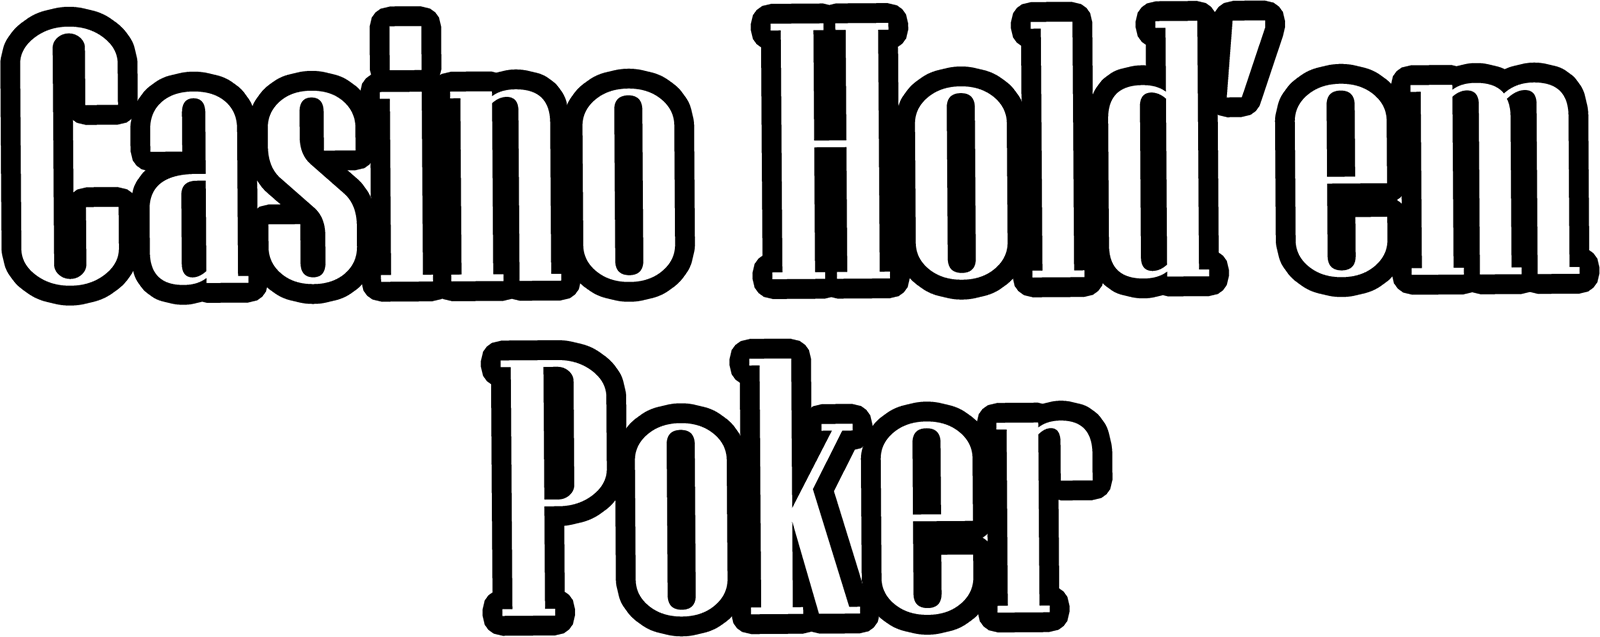 02_casino-holdem-logo-2-rows_casinoholdem.png thumbnail